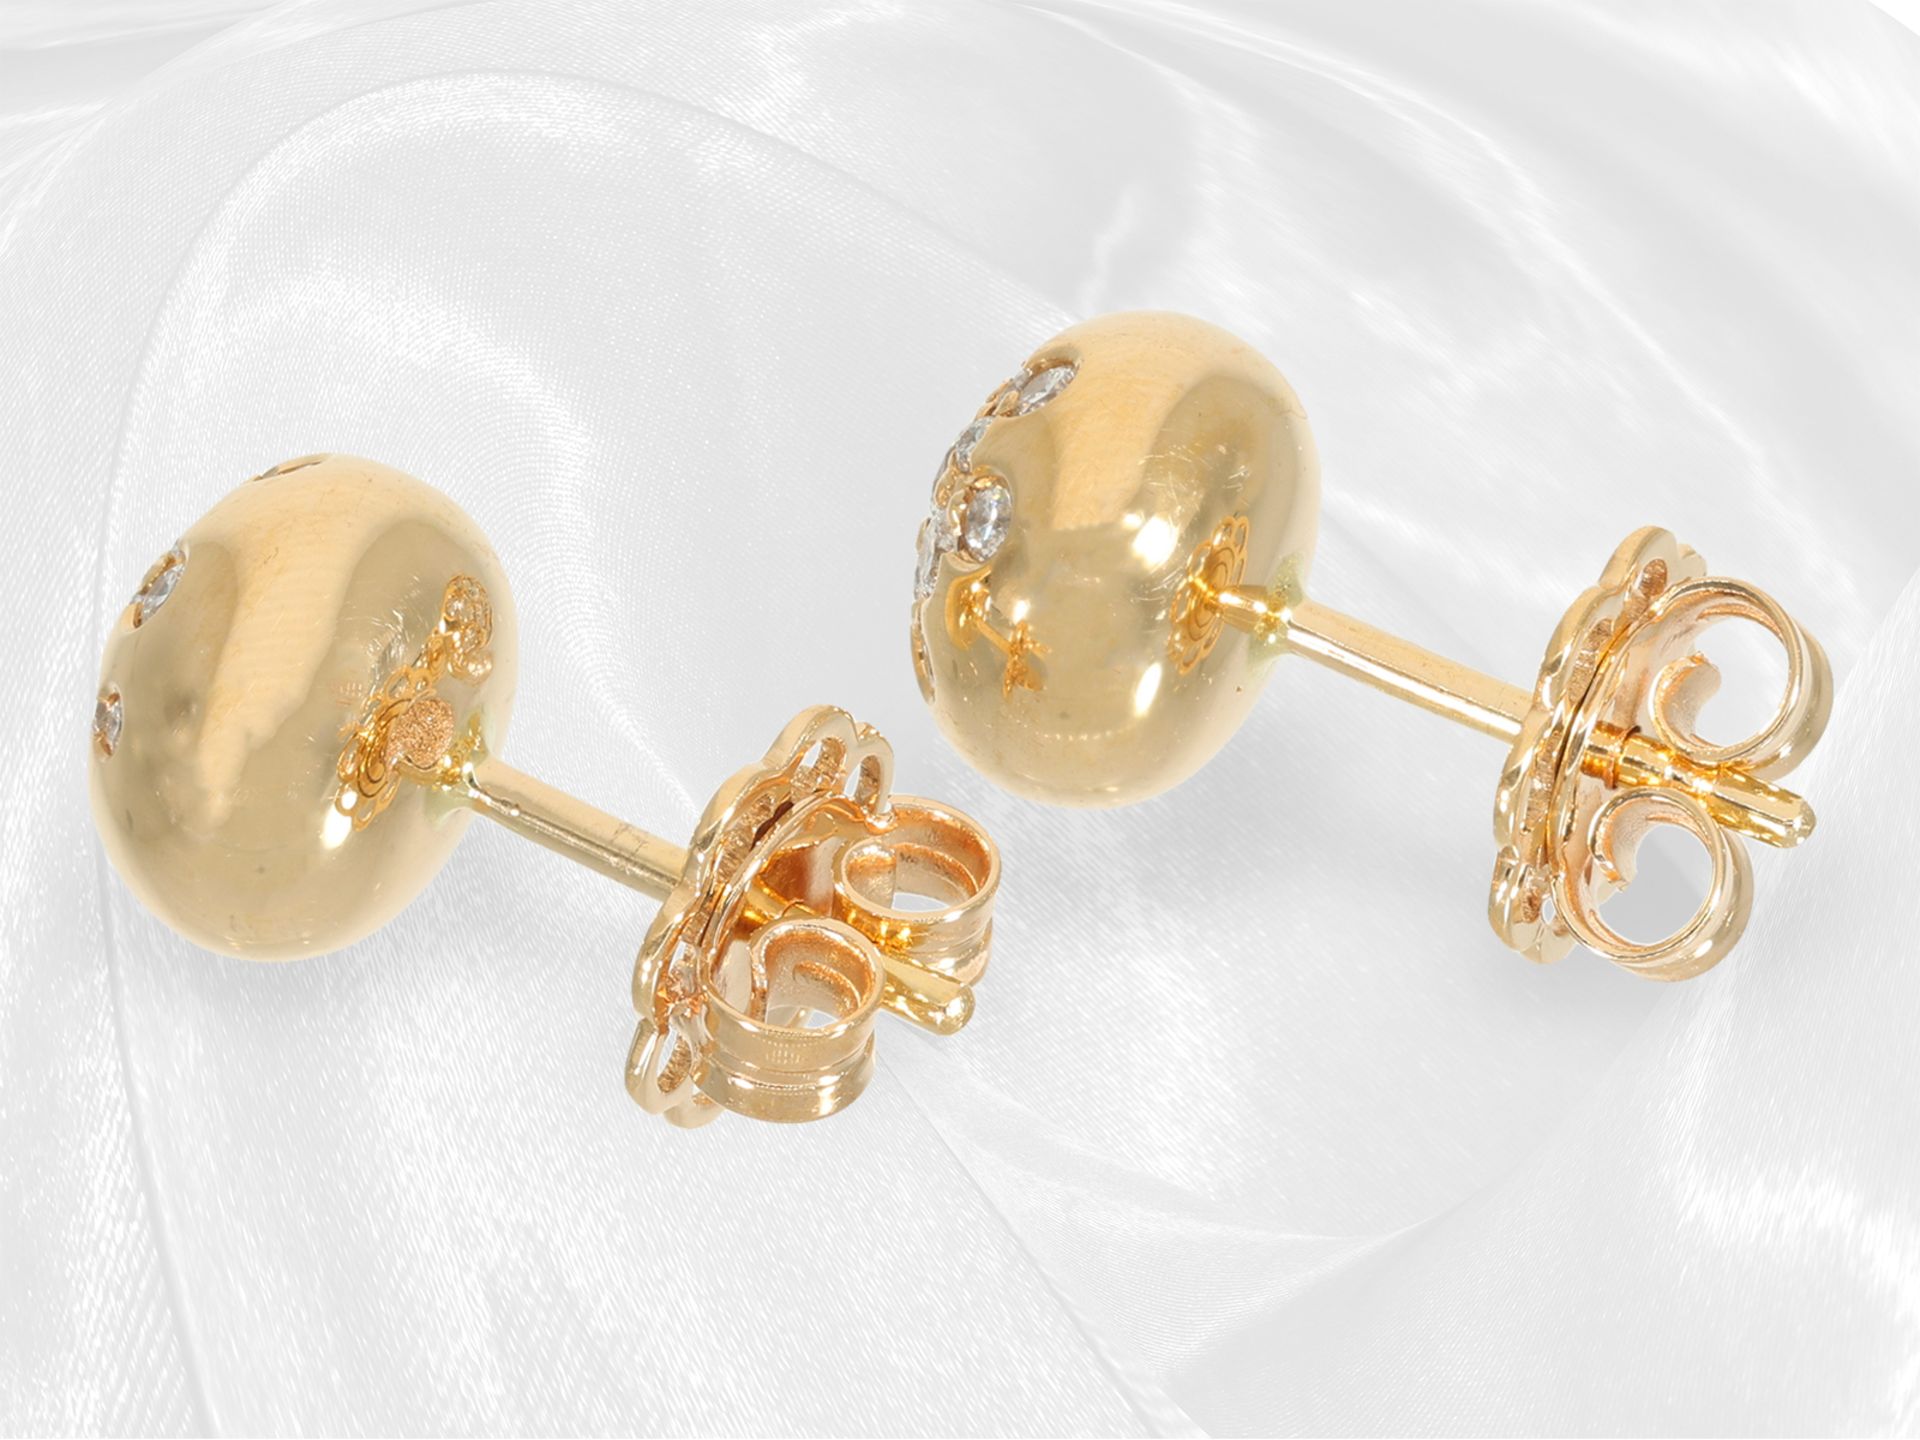 Pink gold unworn designer brilliant-cut diamond stud earrings from Cervera, model "Button", handmade - Image 3 of 4